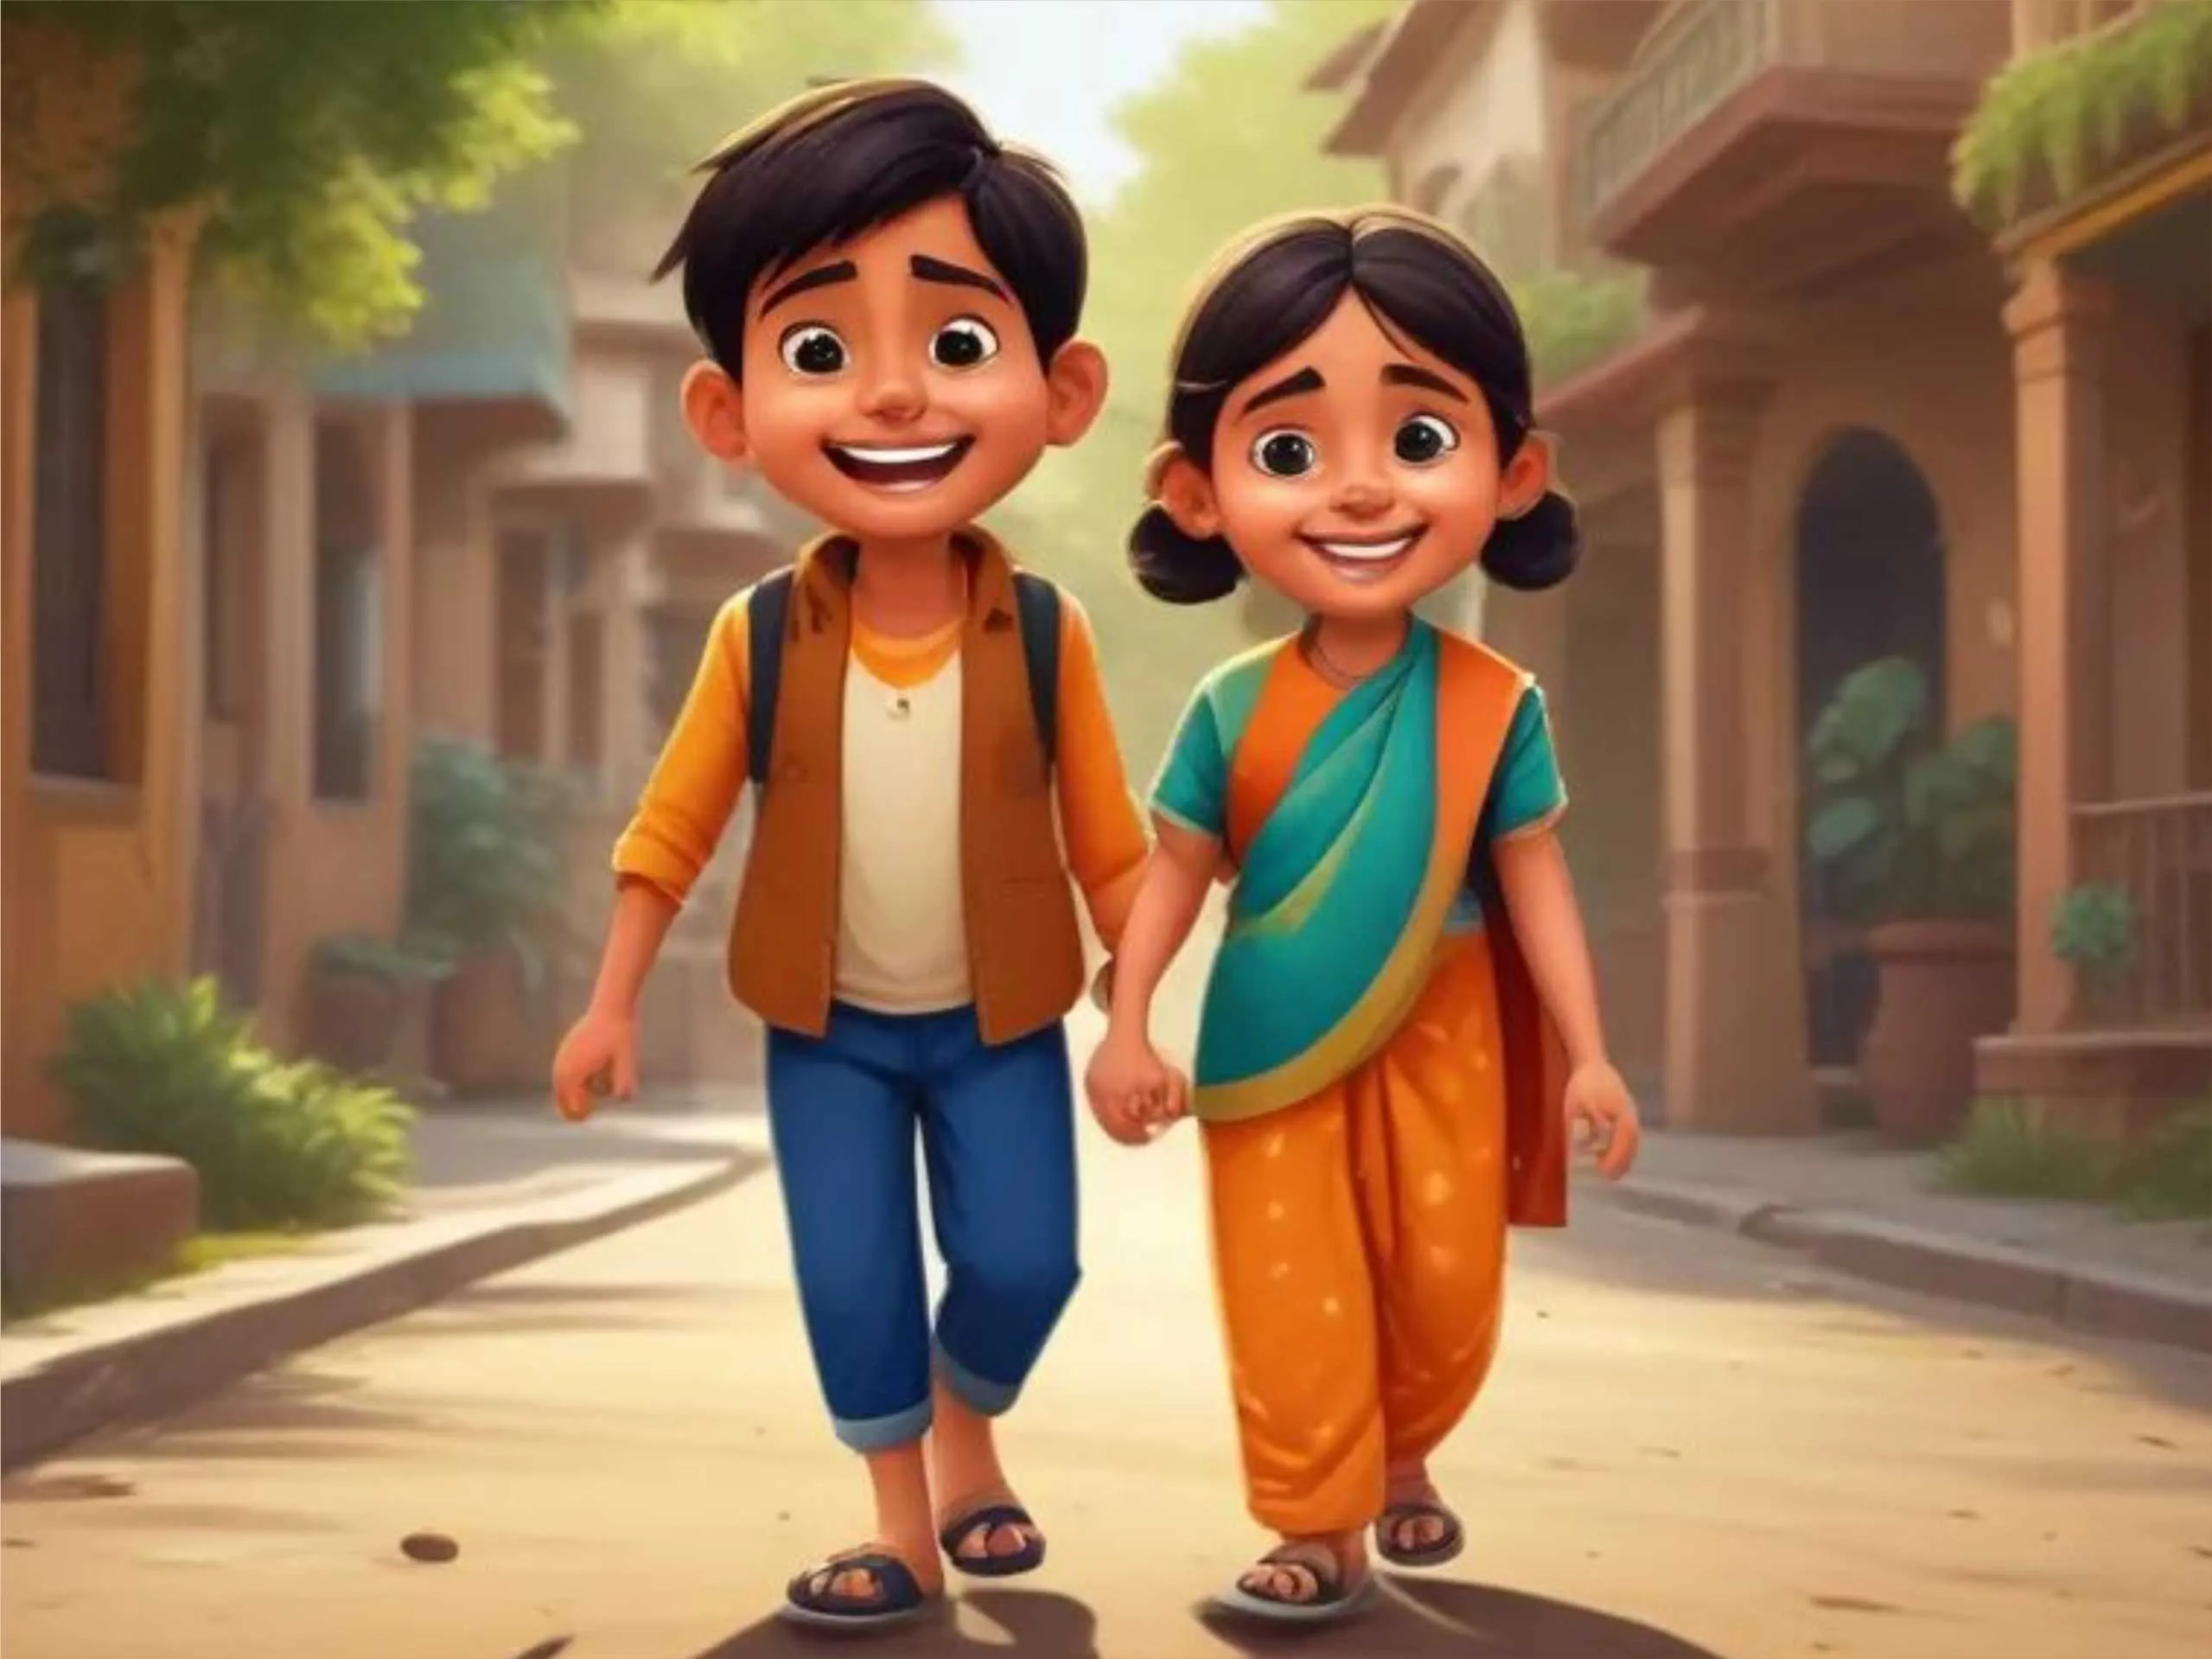 Two Kids cartoon image